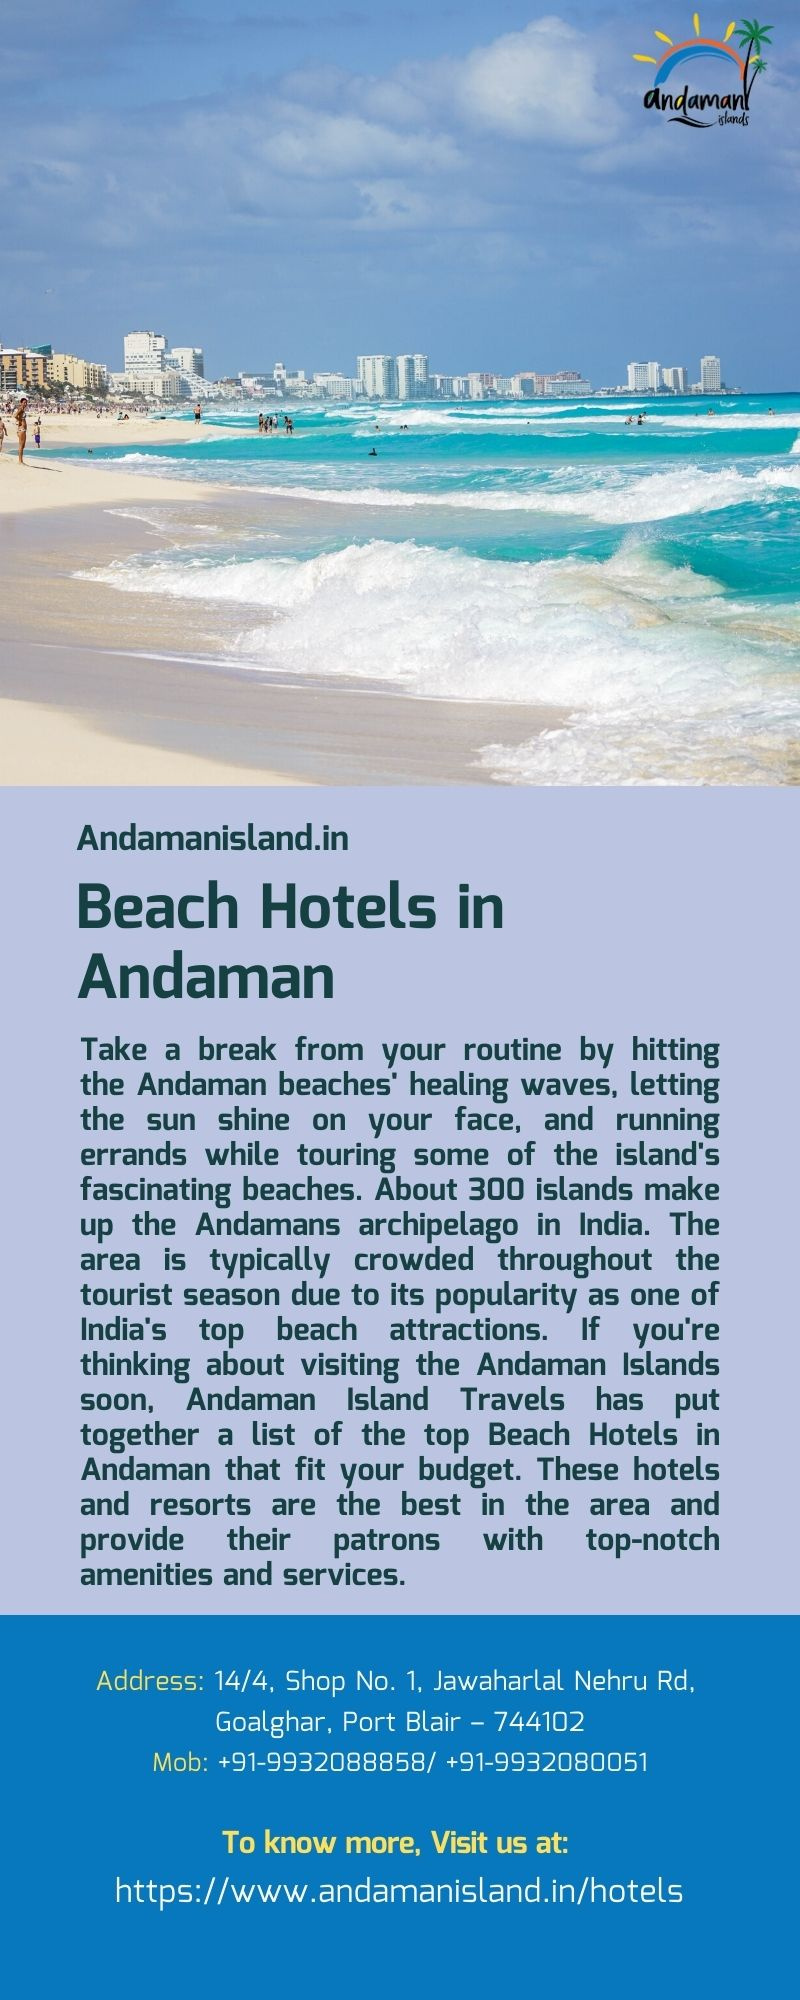 Andaman Islands. Beach Hotels in Andaman